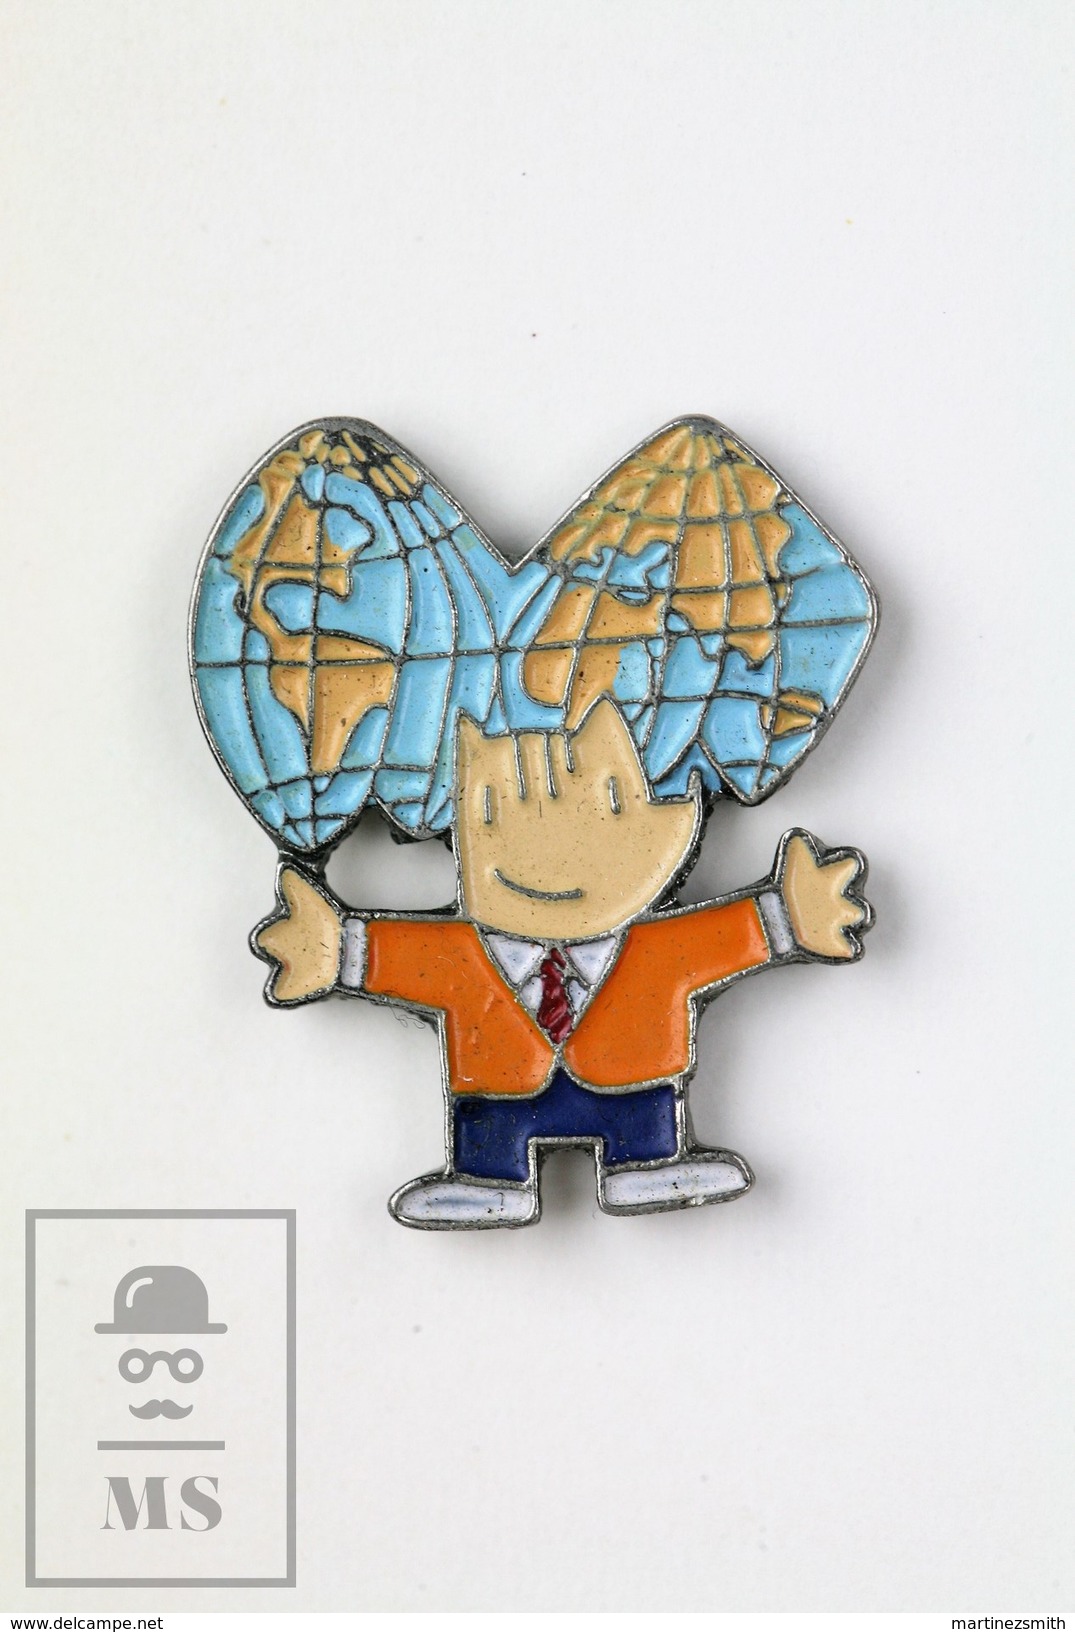 Barcelona 1992 Olympic Games Cobi Mascot - Earth Globe - Pin Badge - Olympische Spiele